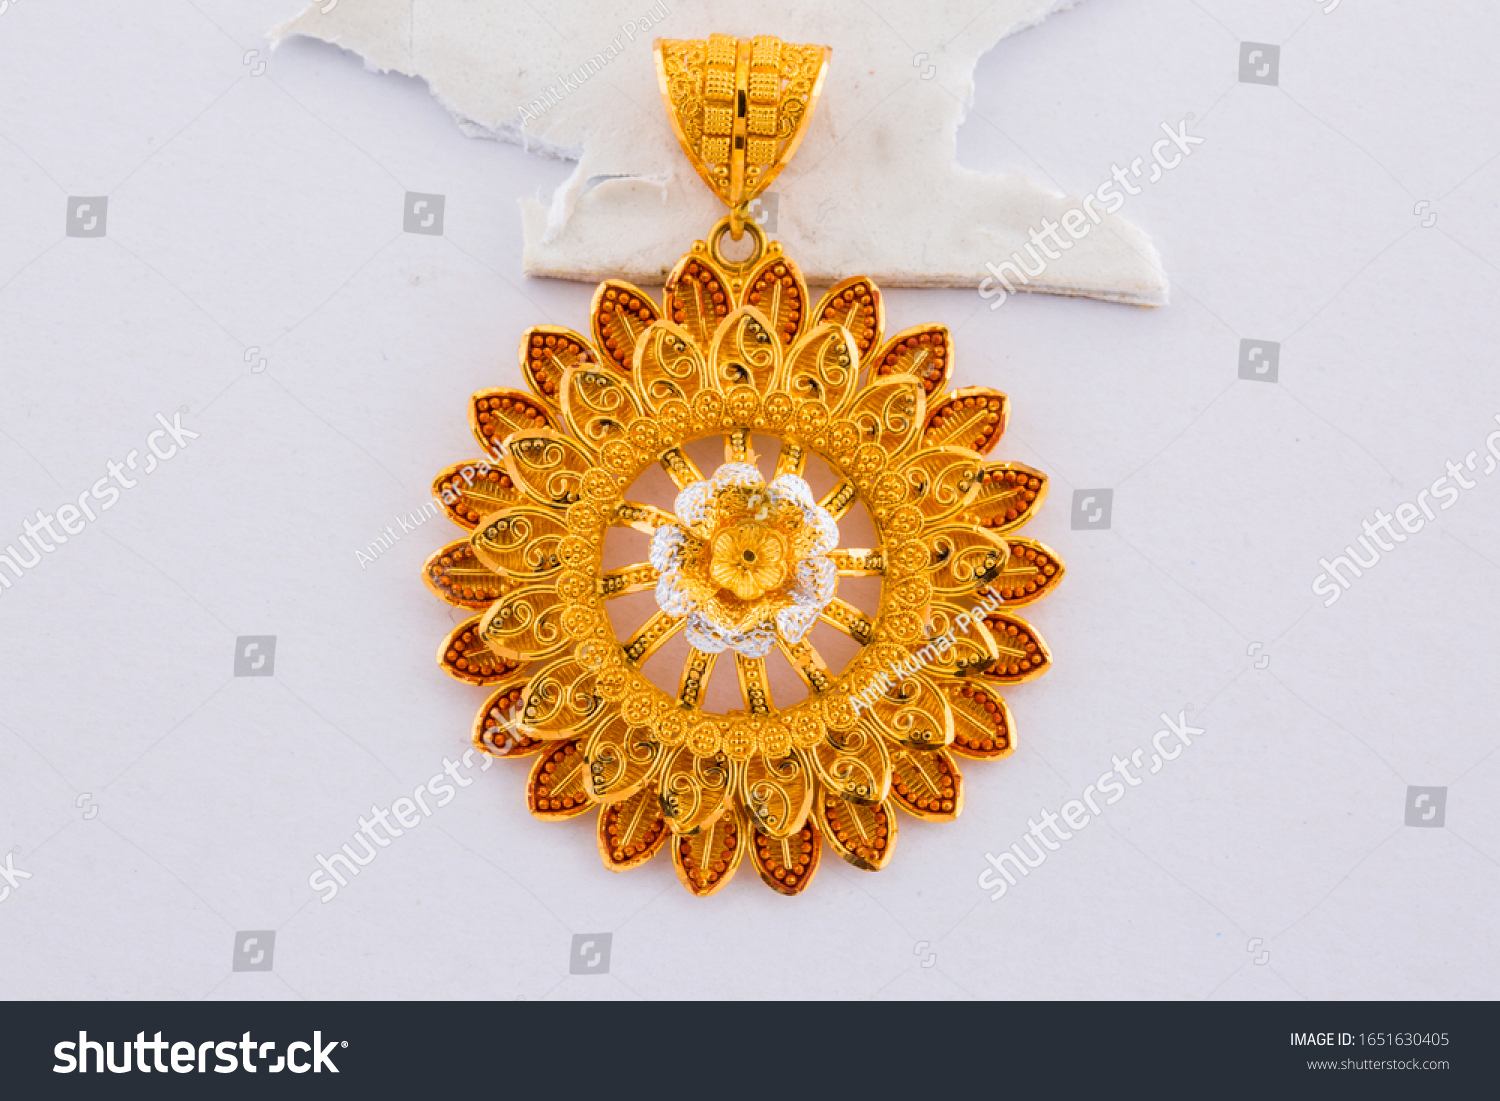 Golden Sunflower Pendent isolated in white background #1651630405